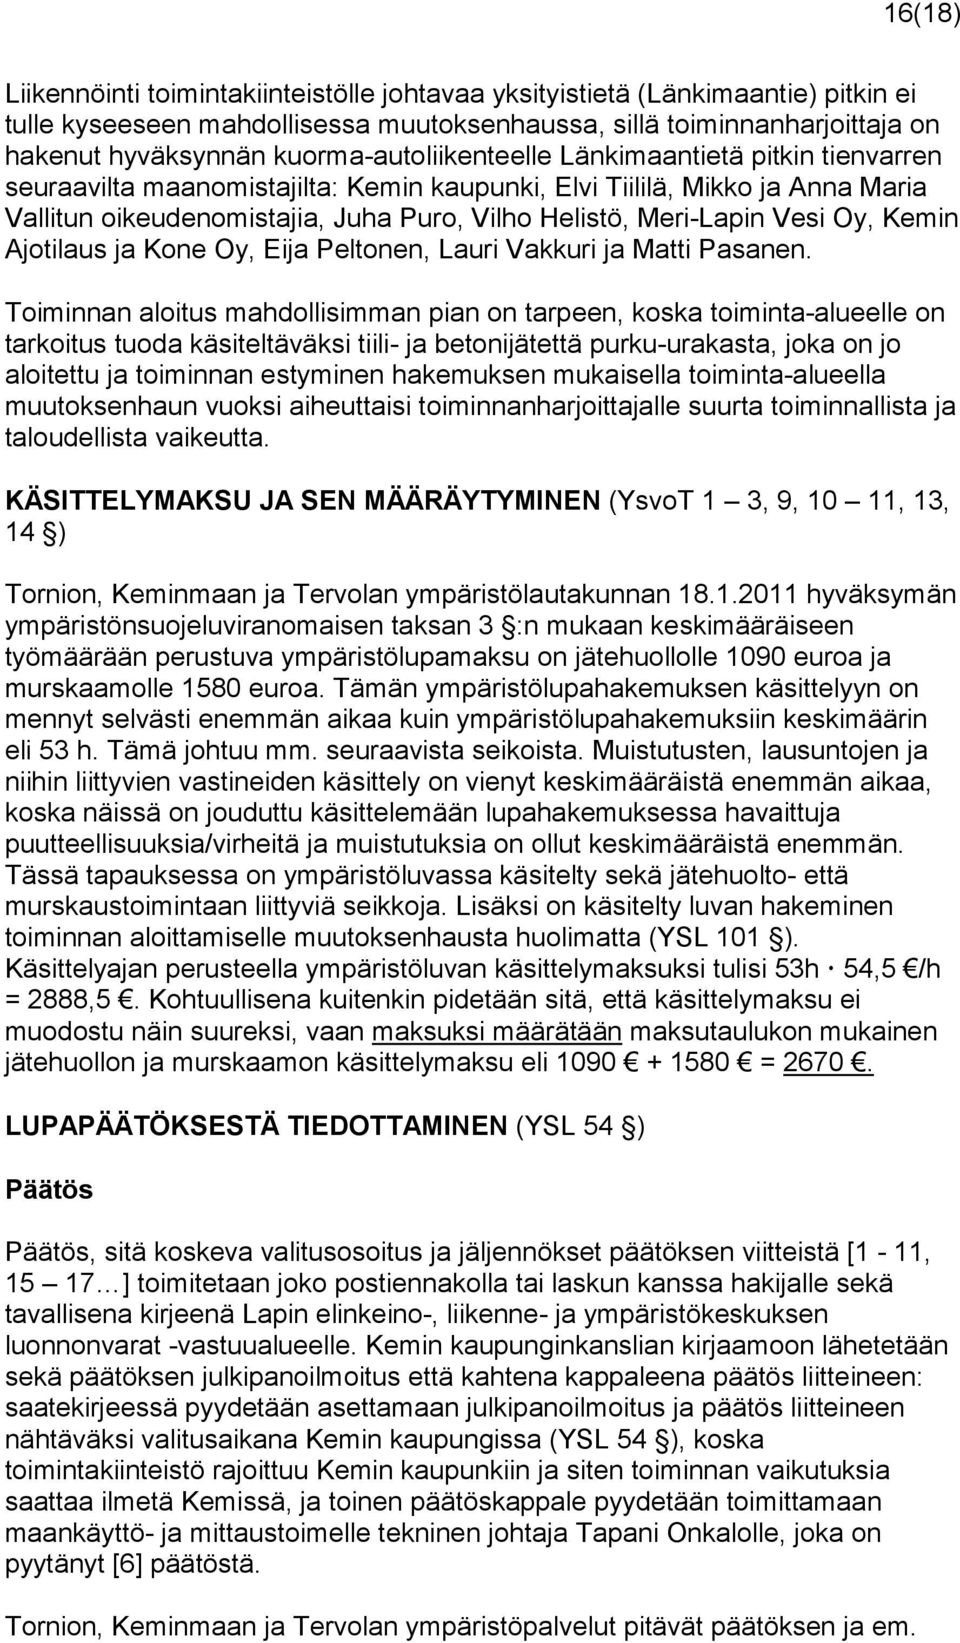 Meri-Lapin Vesi Oy, Kemin Ajotilaus ja Kone Oy, Eija Peltonen, Lauri Vakkuri ja Matti Pasanen.